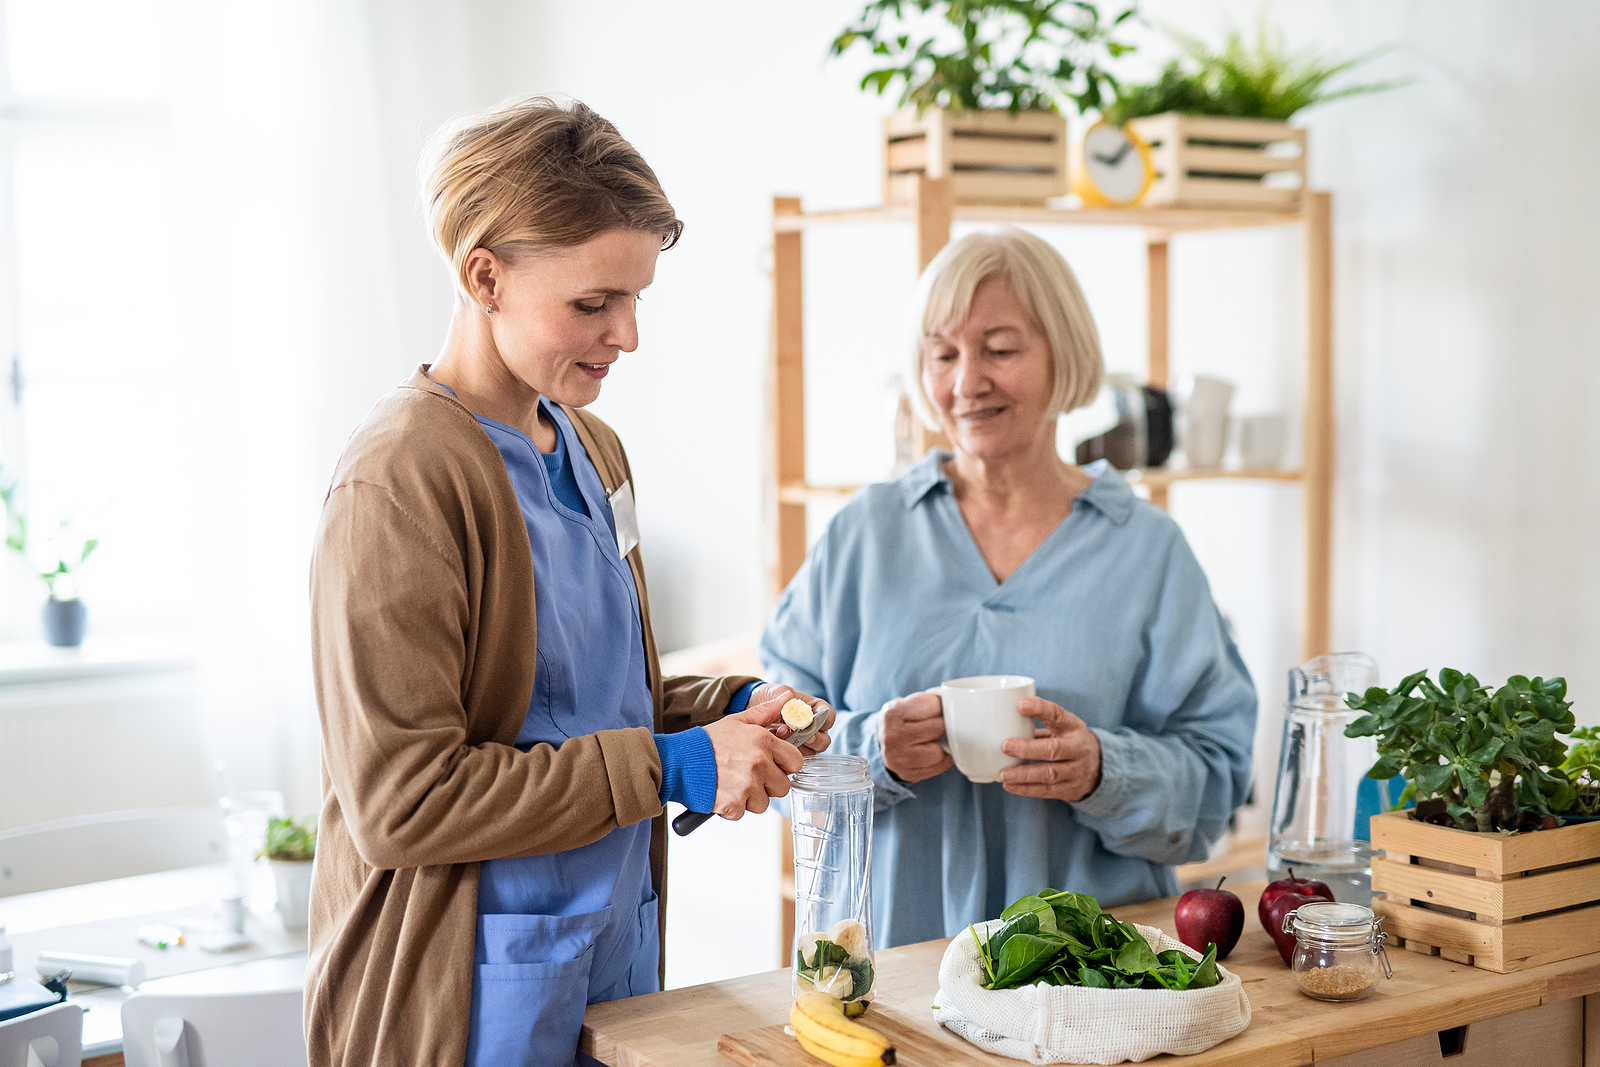 Subscription cookery kit is designed to help elderly women socialise